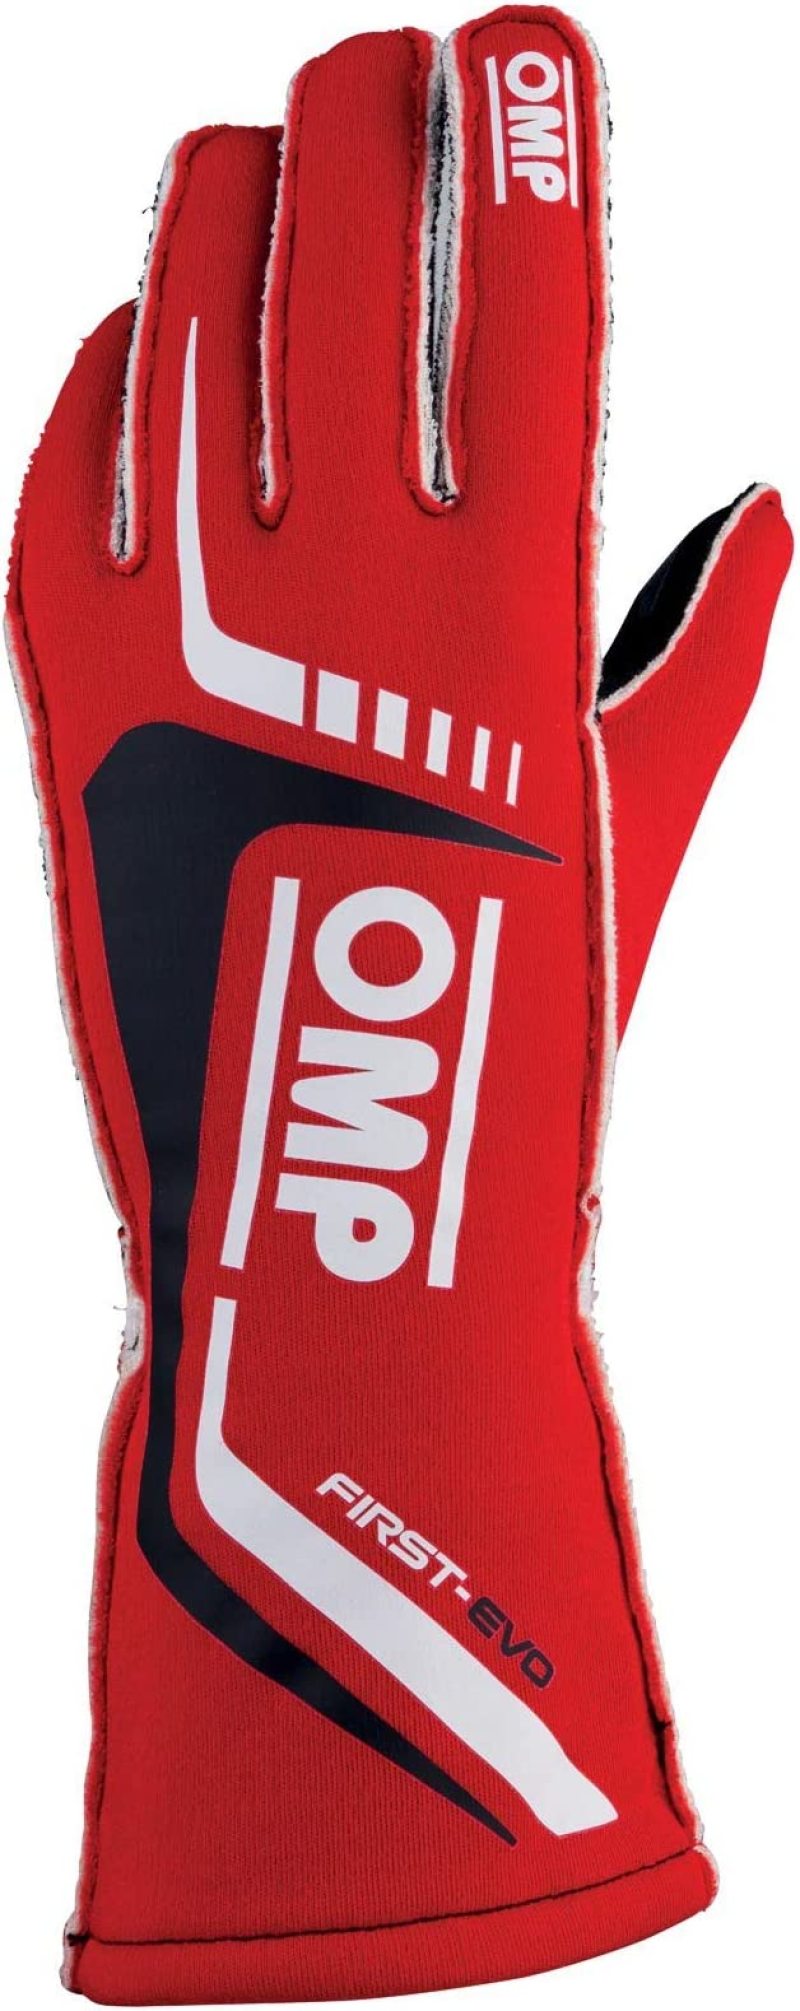 OMP First Evo Gloves Red - Size M (Fia 8856-2018)